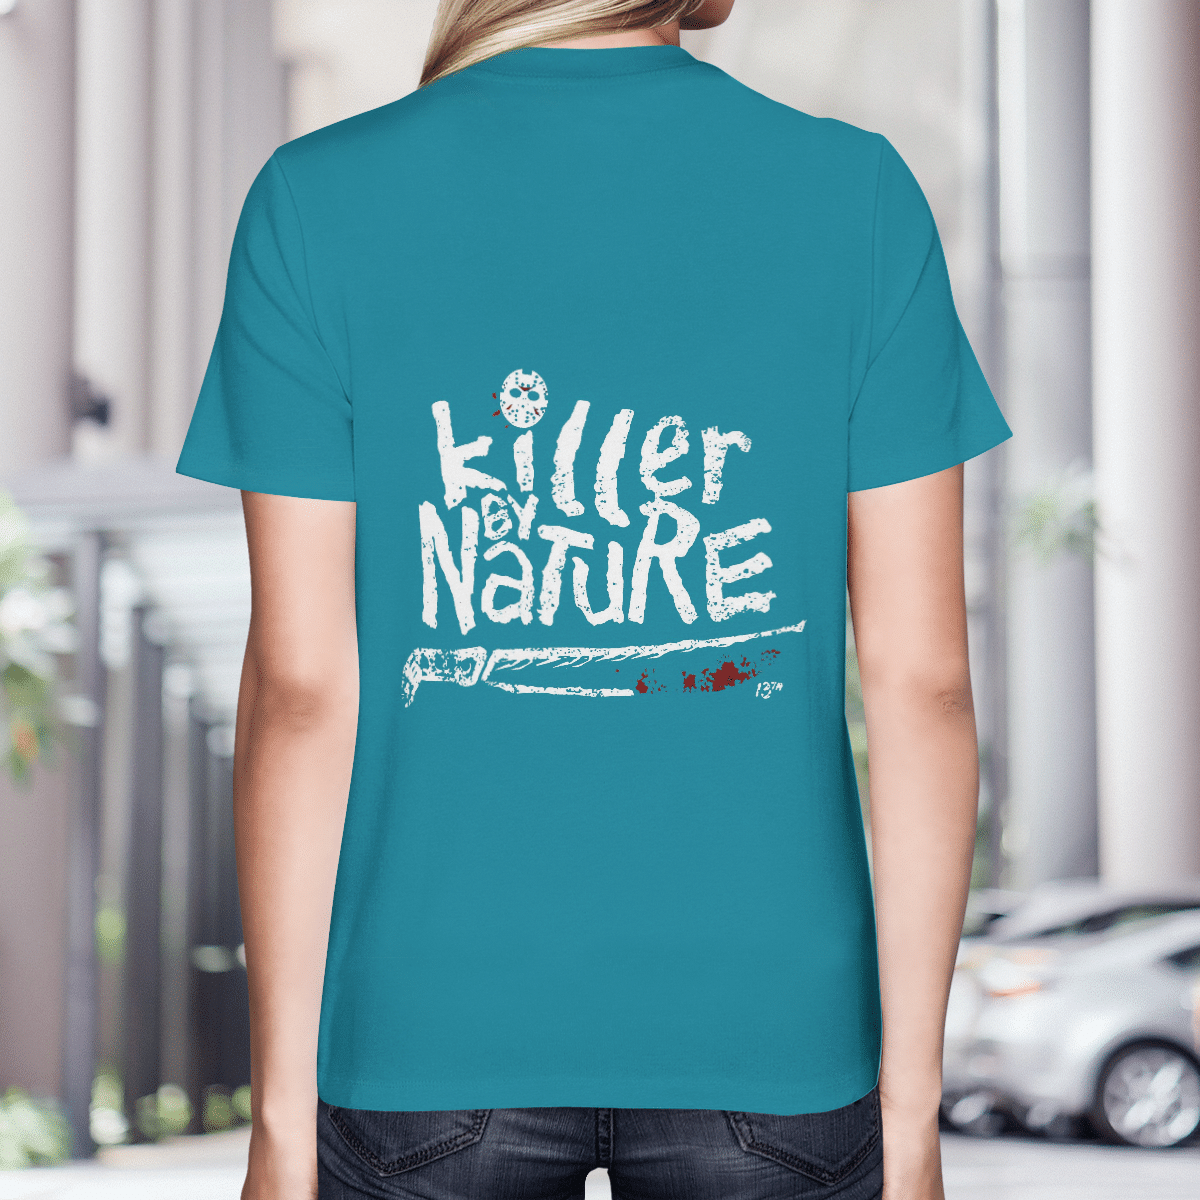 Jason Killer By Nature T-shirt